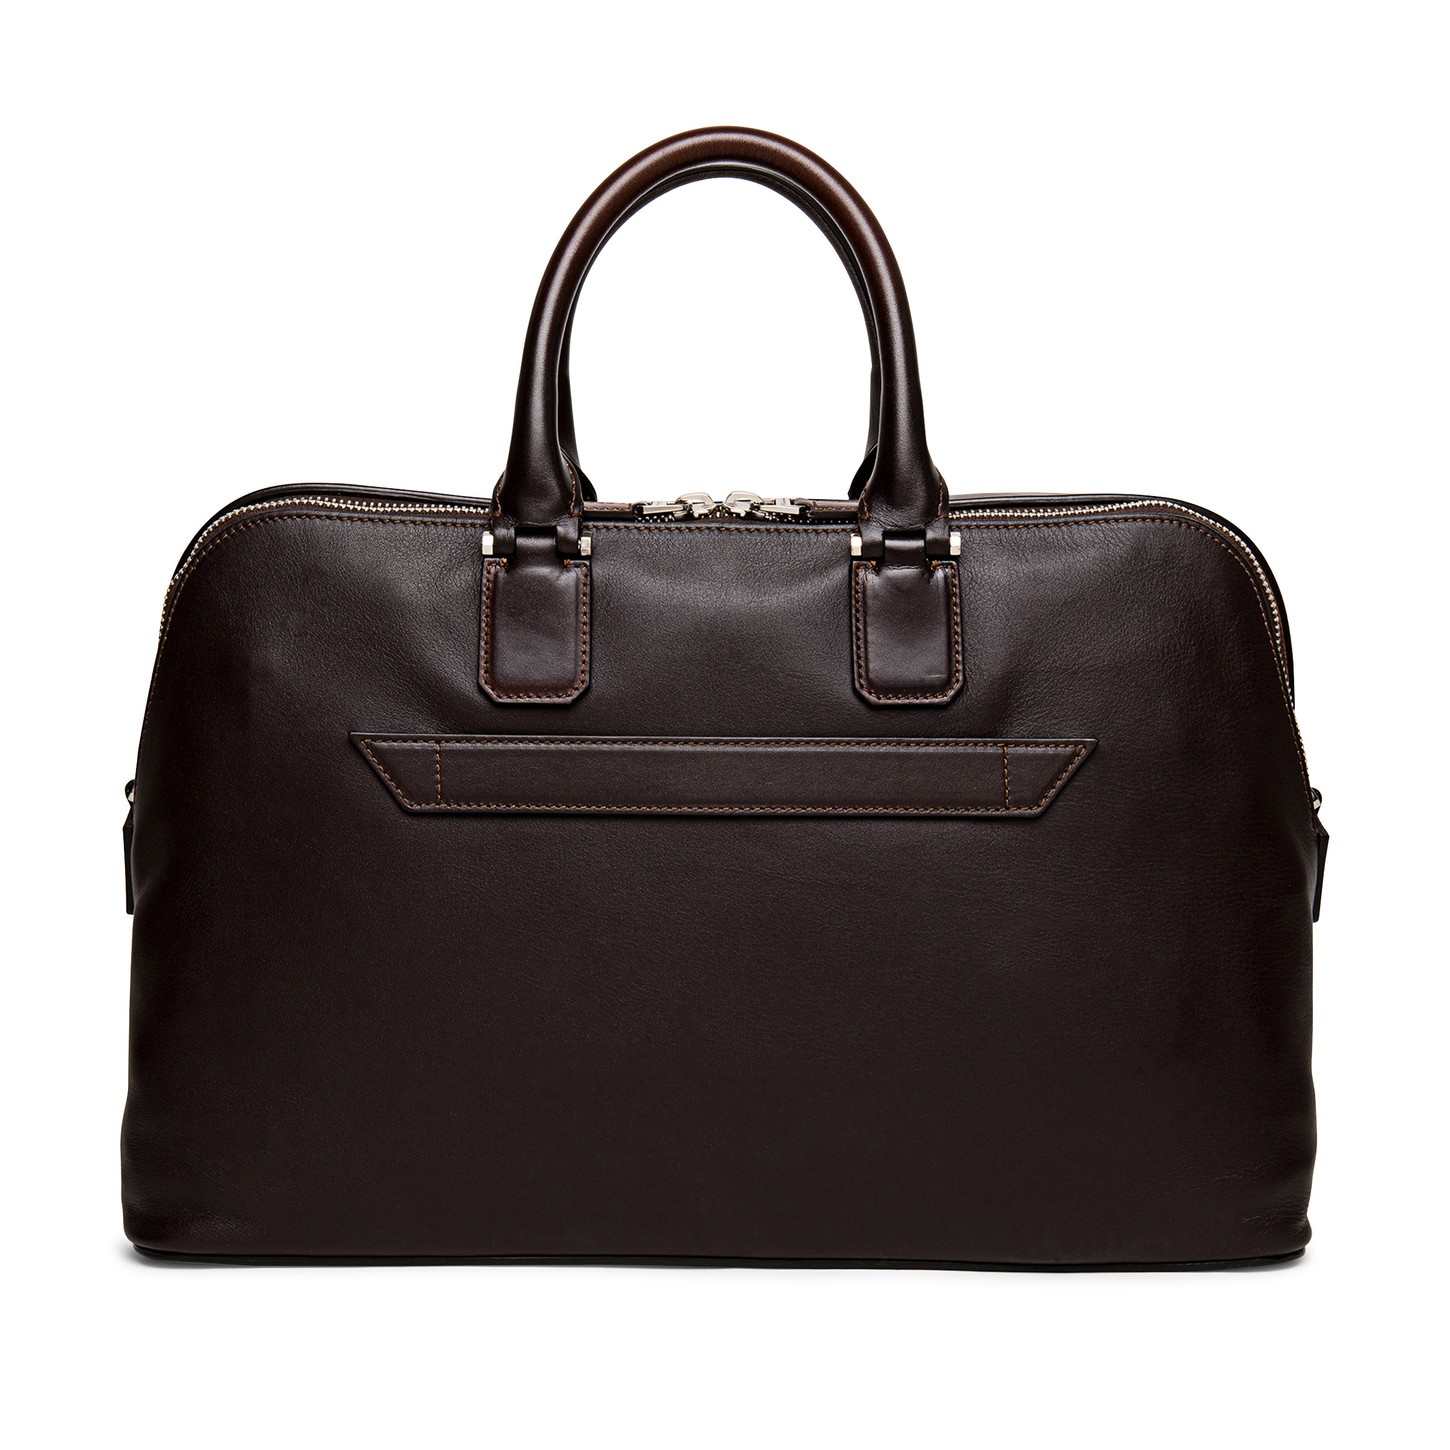 Brown leather laptop bag - 2